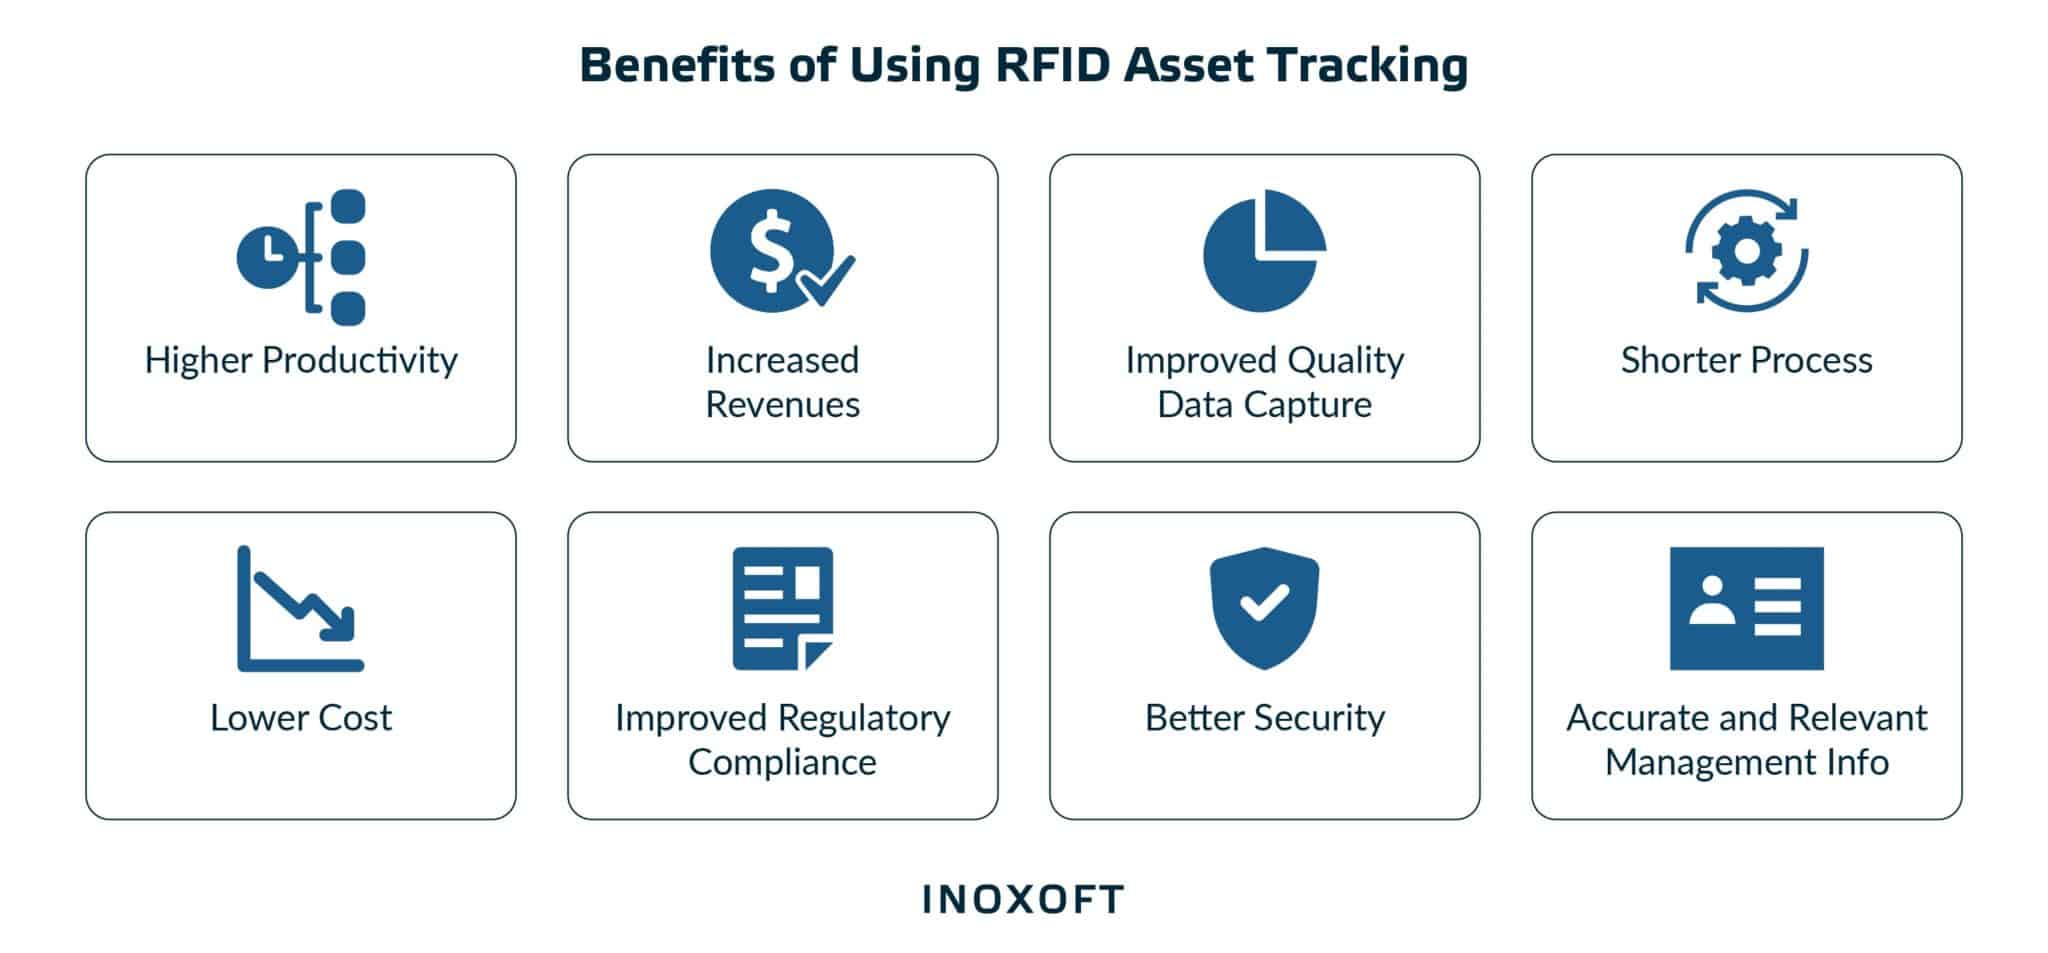 Benefits of RFID Asset Tracking